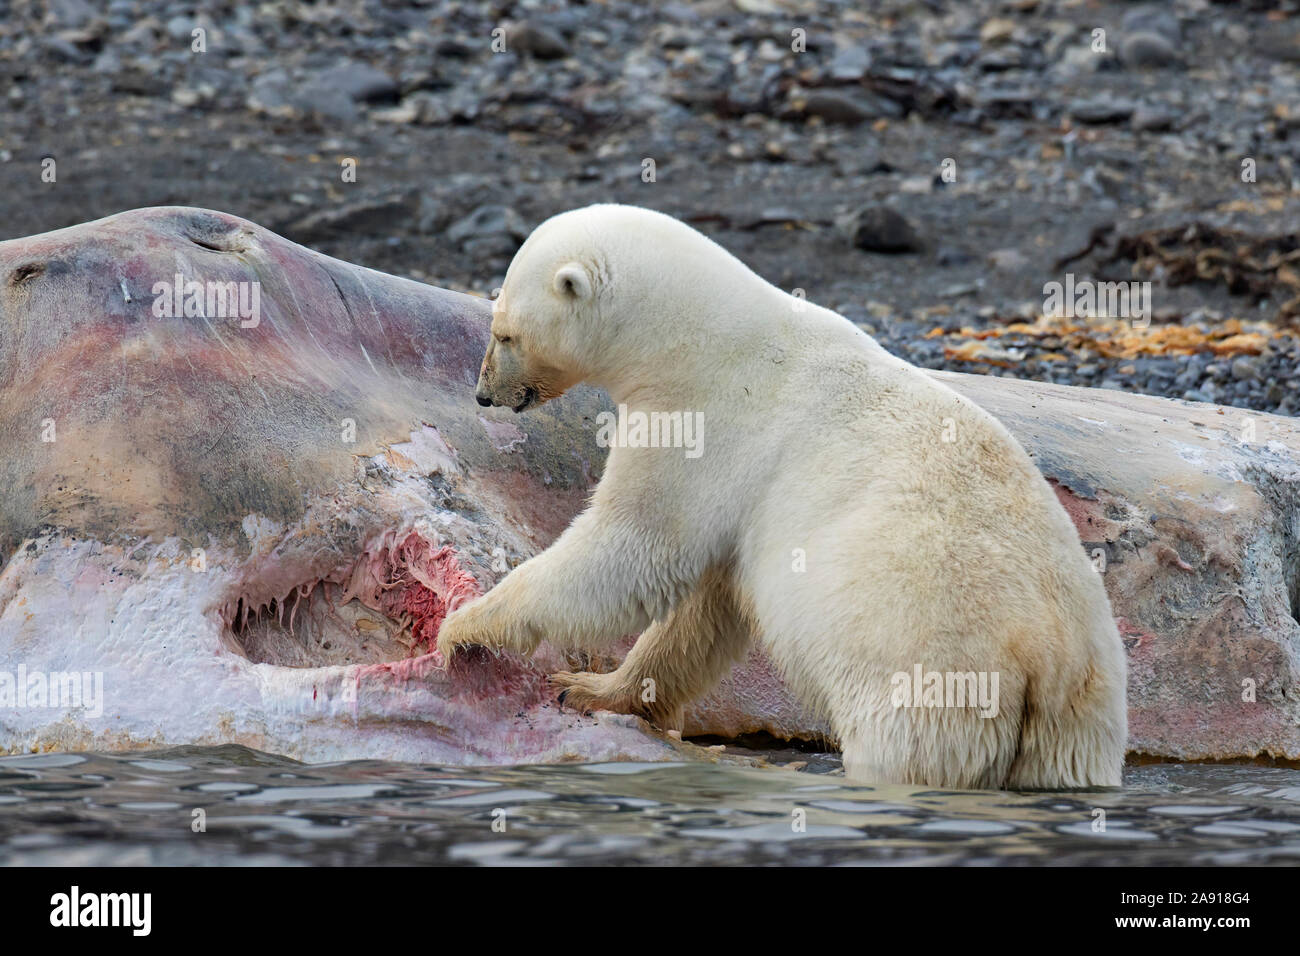 Scavenging Polar bear (Ursus maritimus) feeding on carcass of stranded dead sperm whale along the Svalbard coast, Spitsbergen, Norway Stock Photo